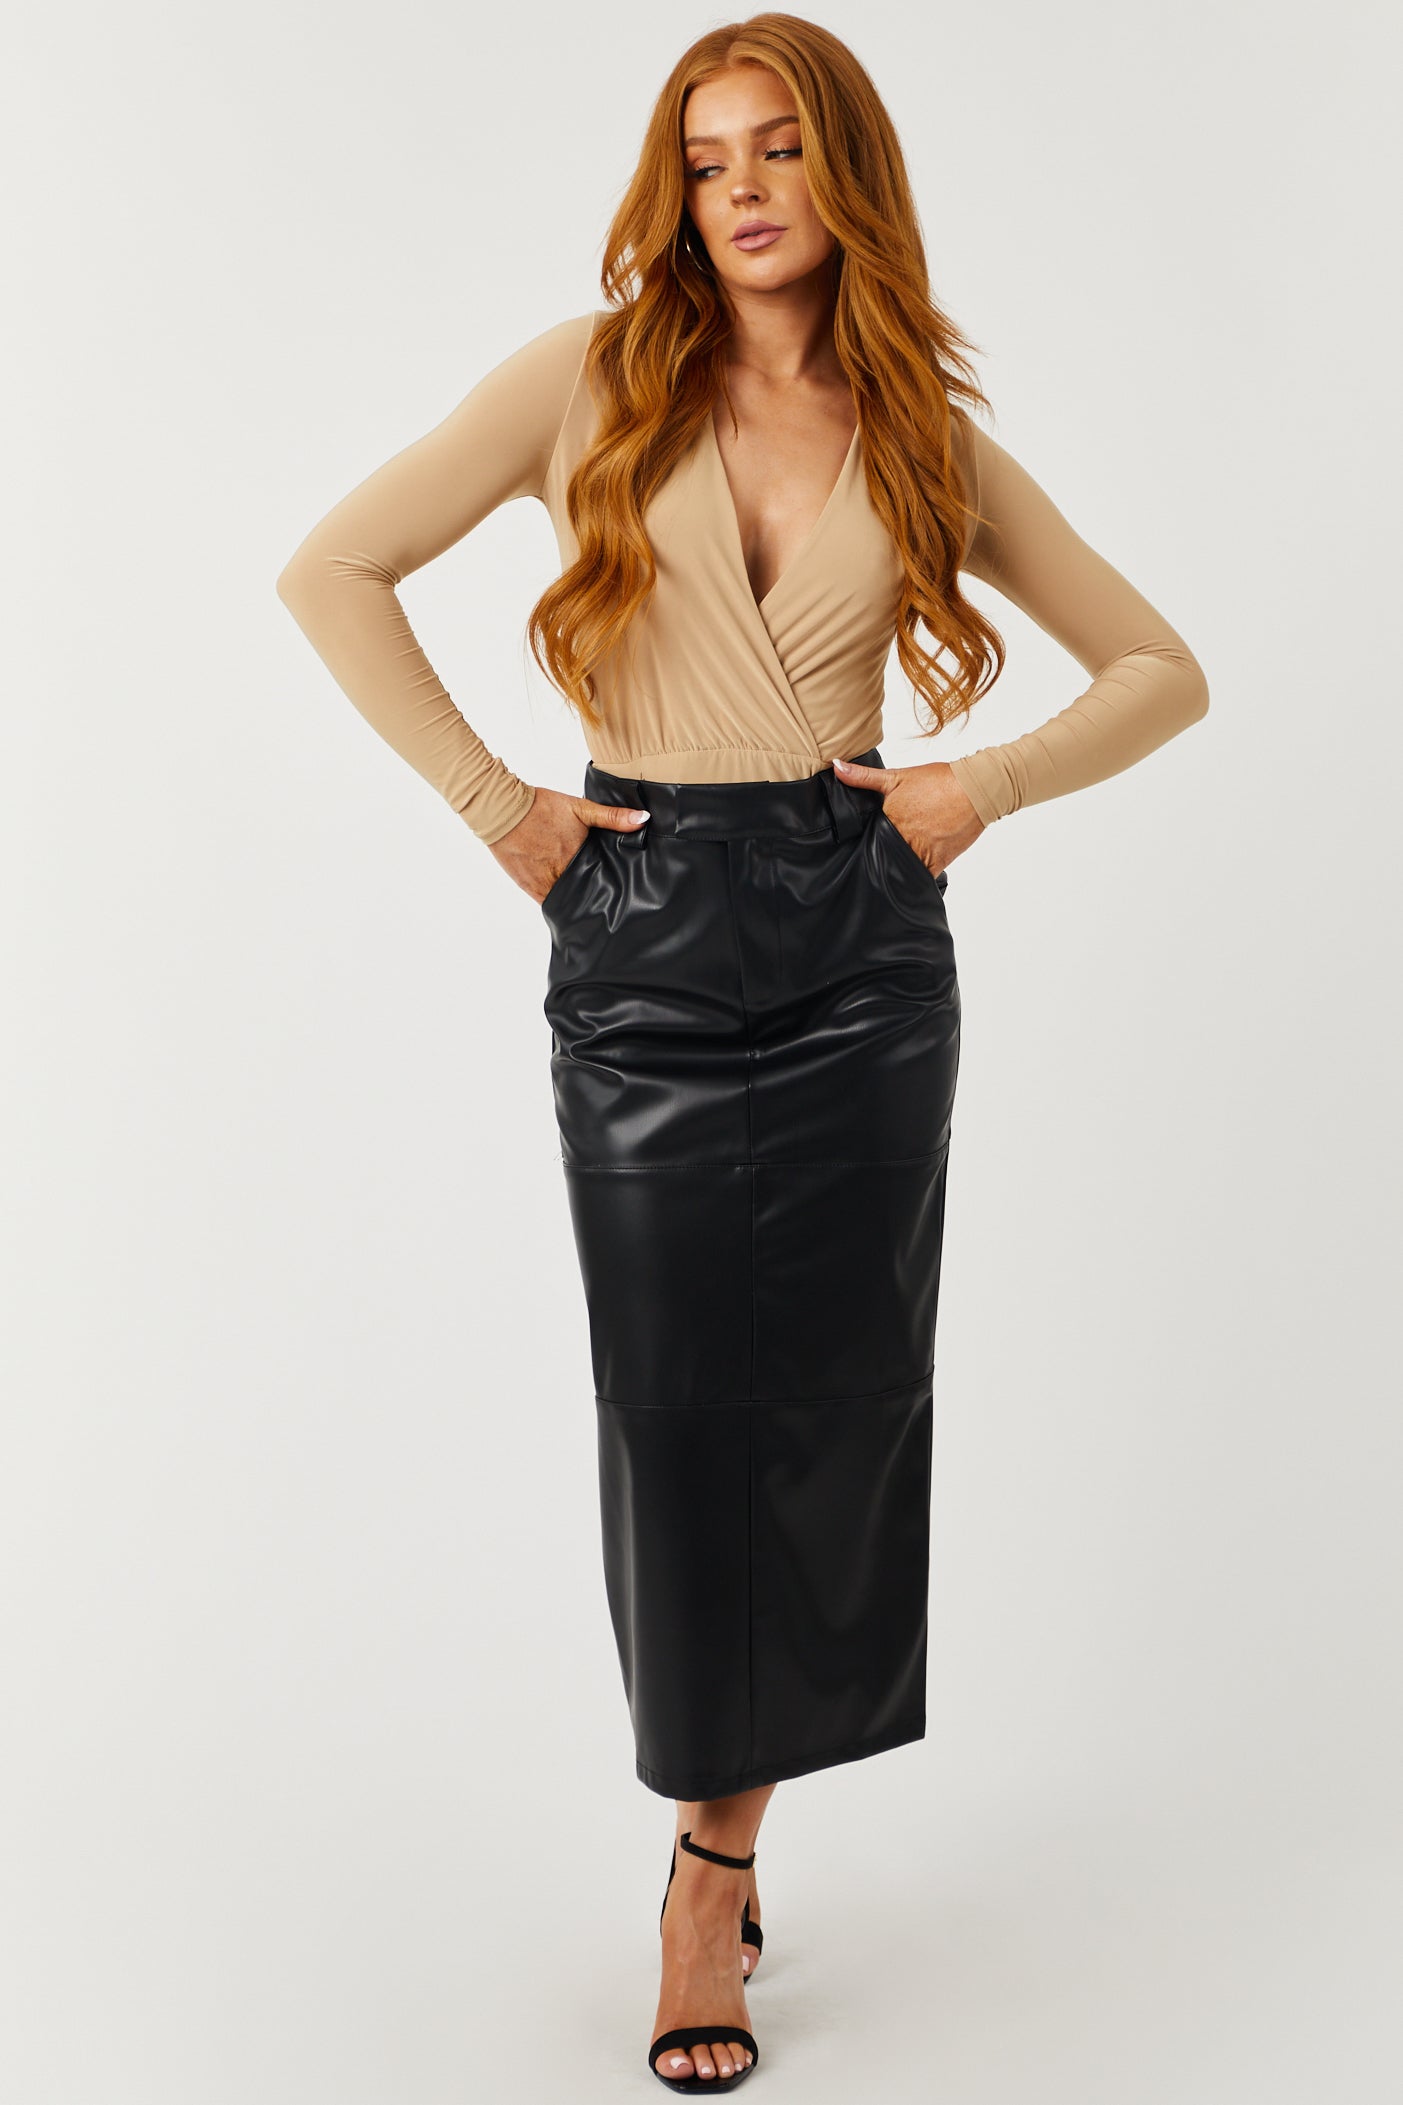 Black Faux Leather Back Slit Midi Skirt